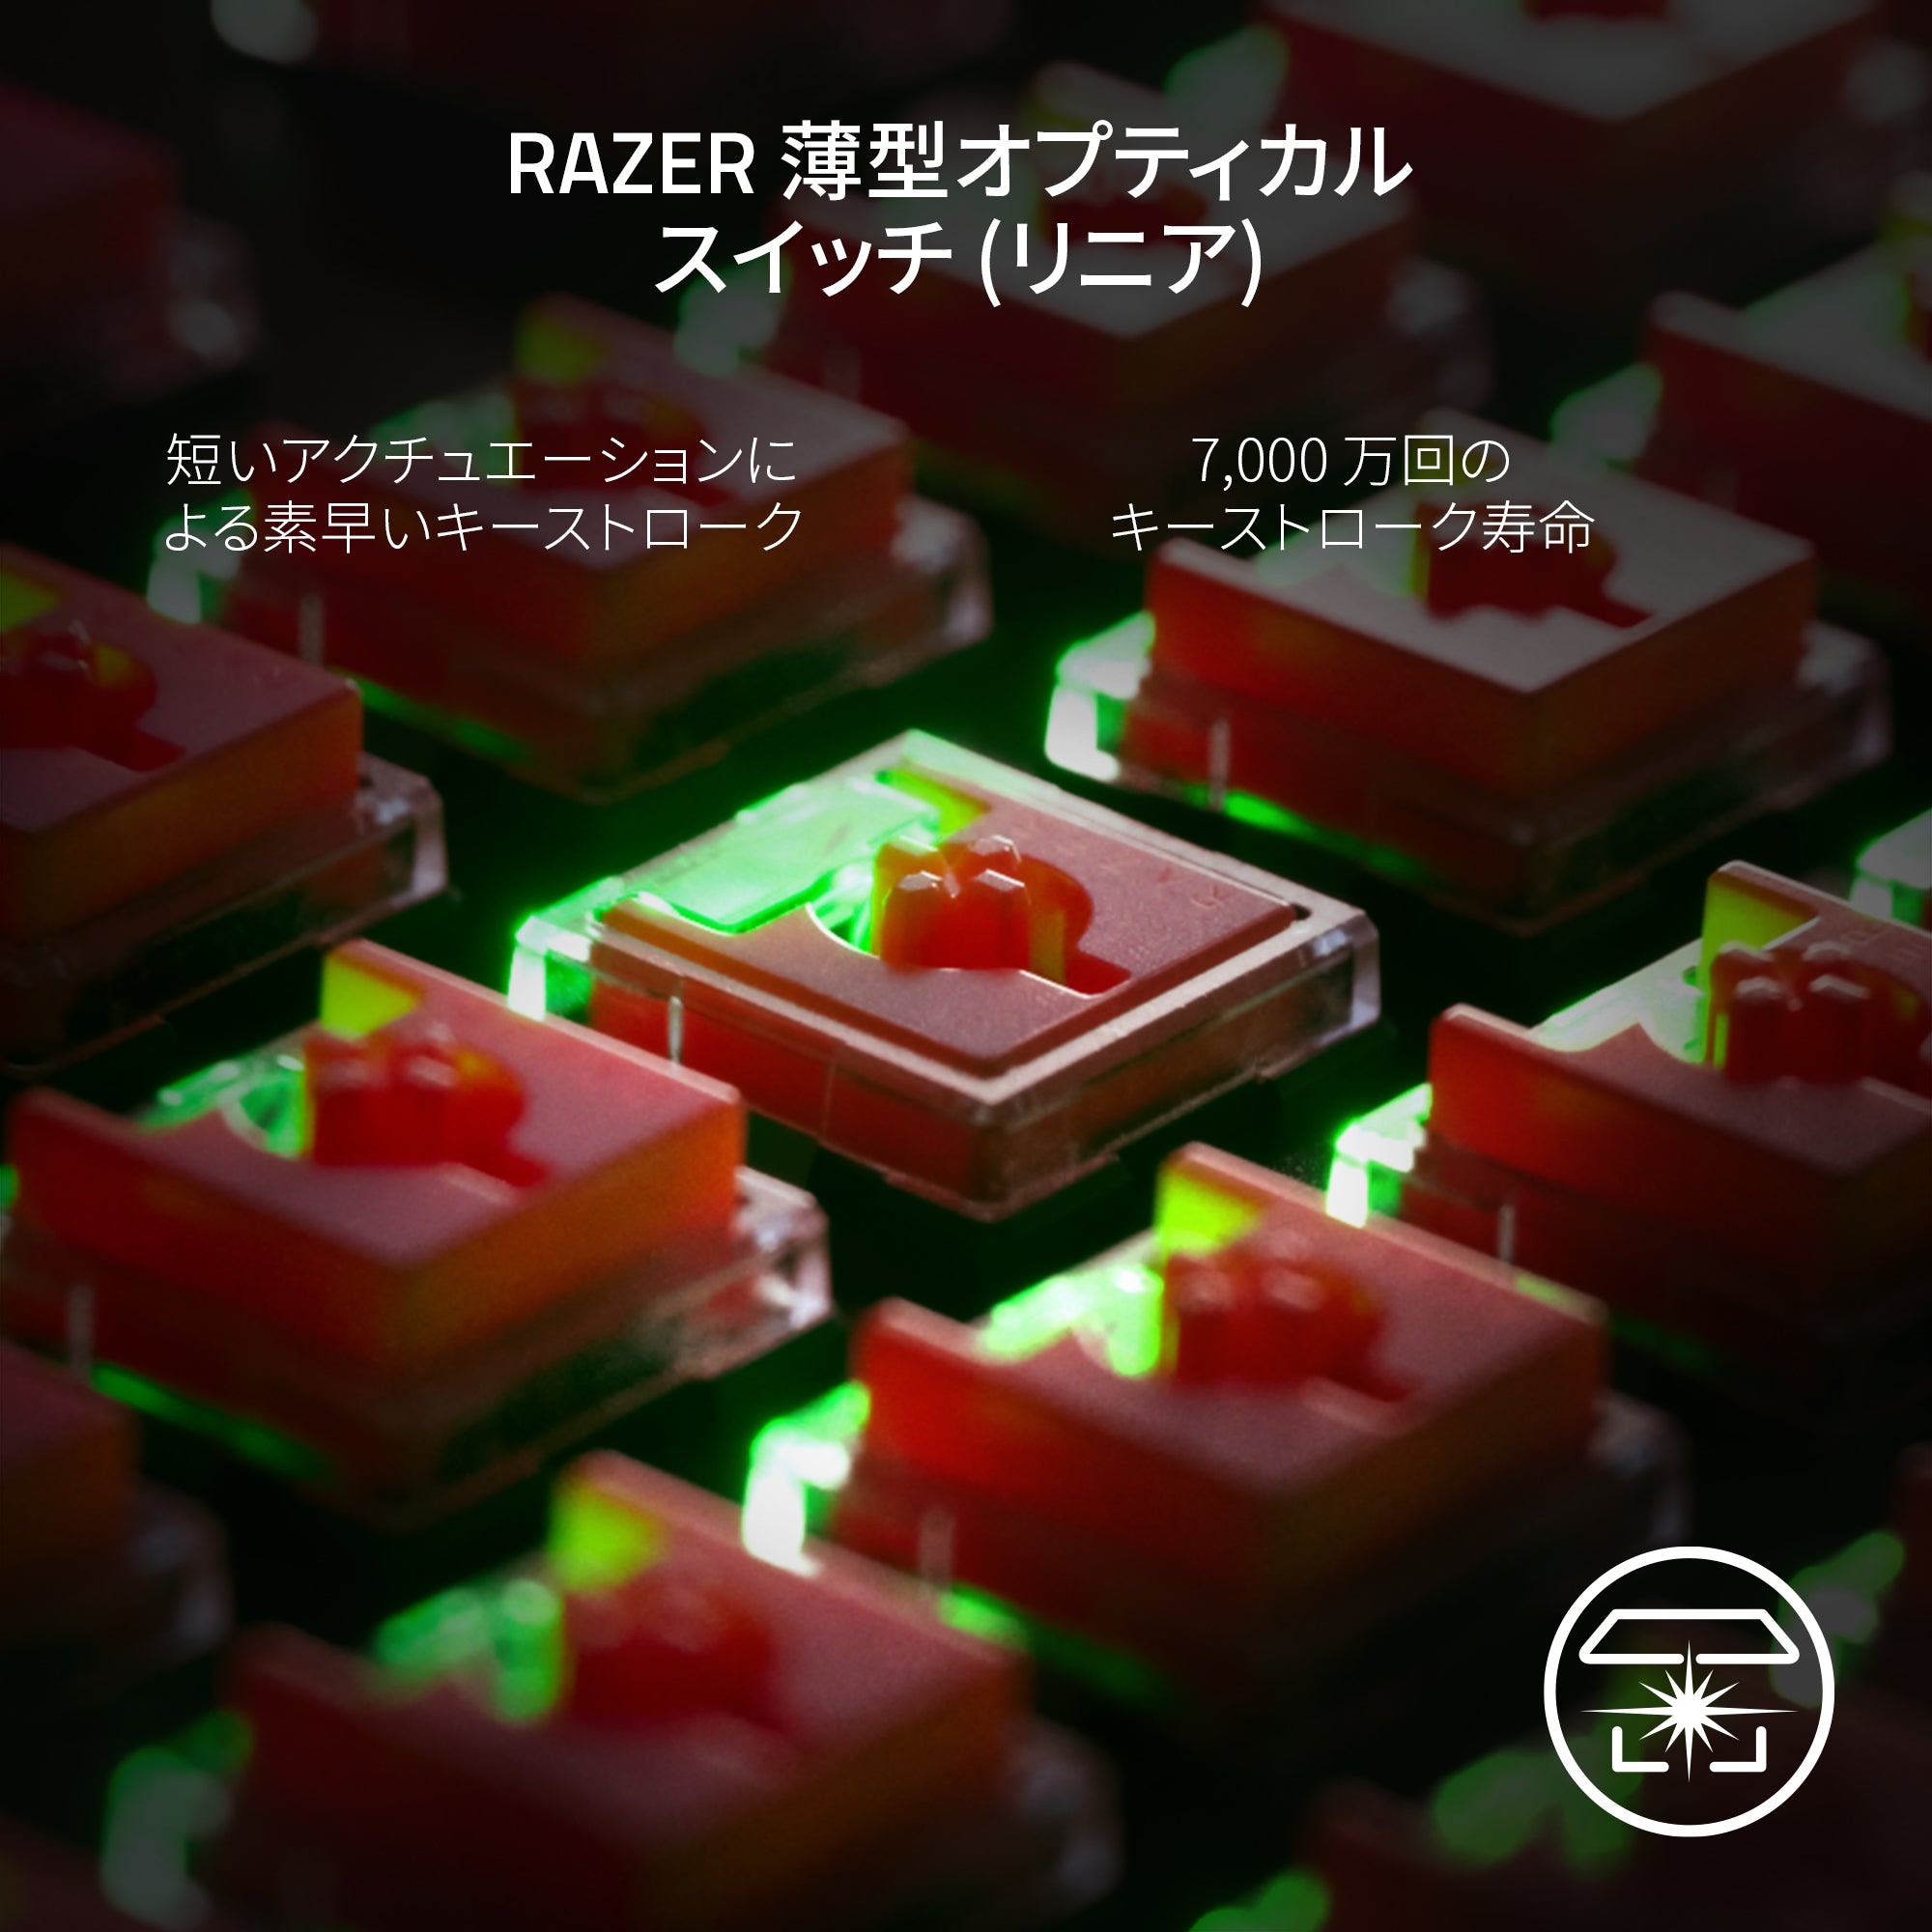 Razer DeathStalker V2 Pro Tenkeyless JP White Edition Linear Optical Switch デスストーカー ブイツー プロ テンキーレス ジェーピー ホワイトエディション リニア オプティカルスイッチ thumbnail 2